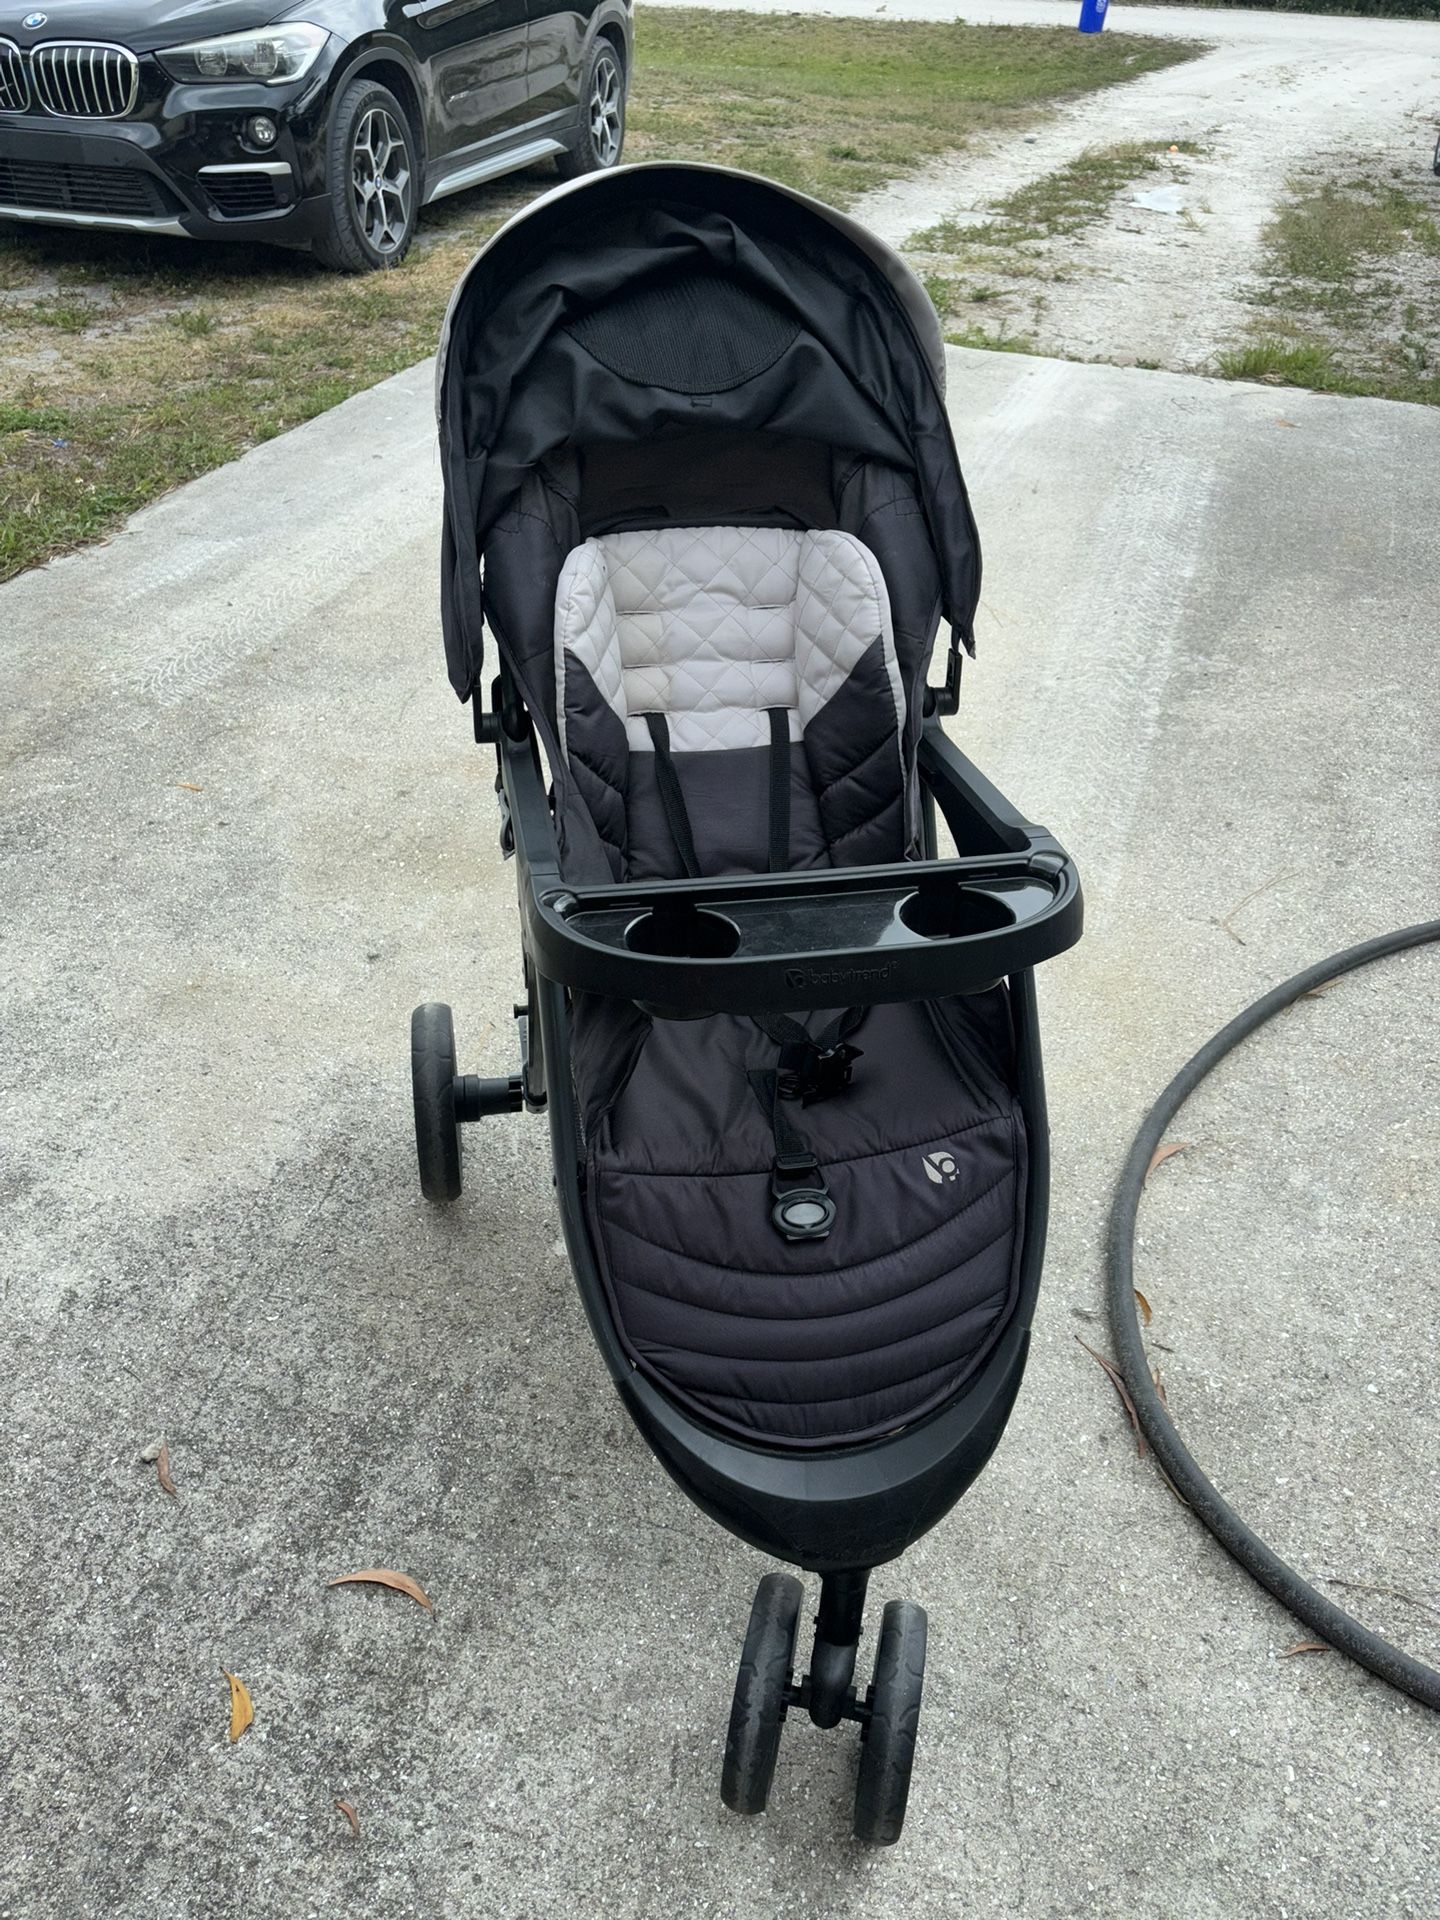 Babytrend Triwheel Stroller